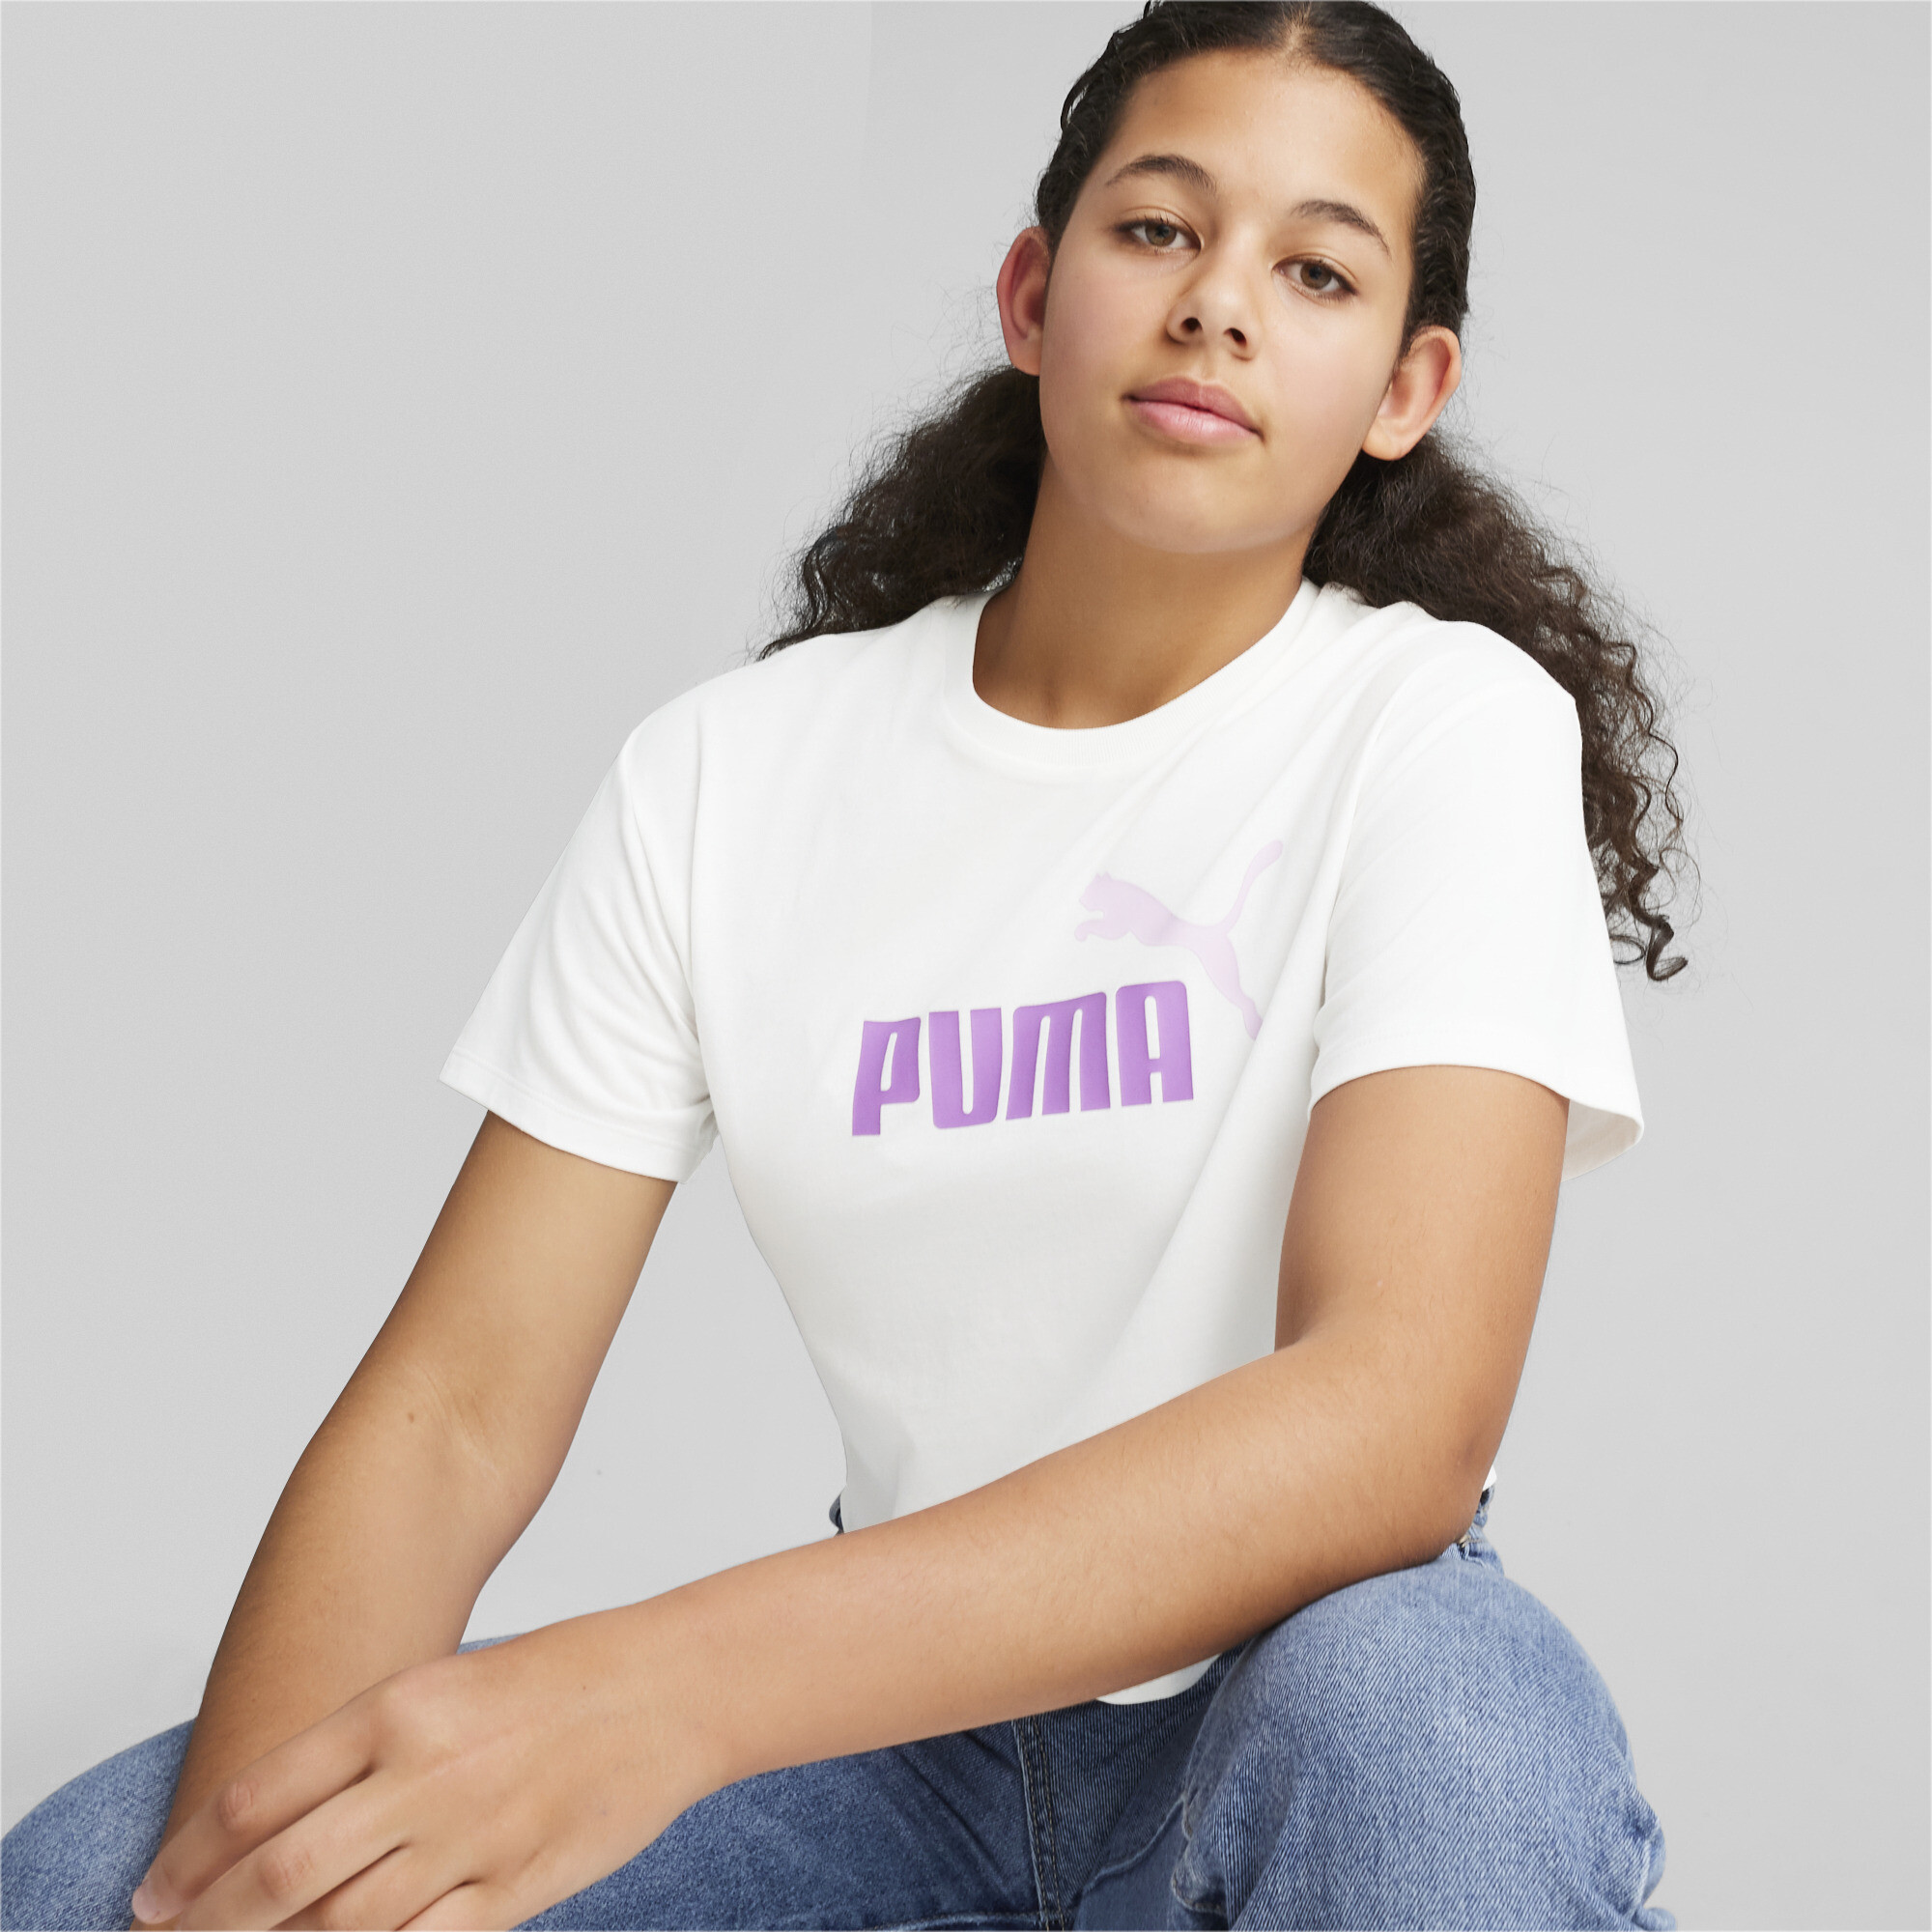 Puma Girls Logo Cropped Tee Youth, White, Size 4, Shop